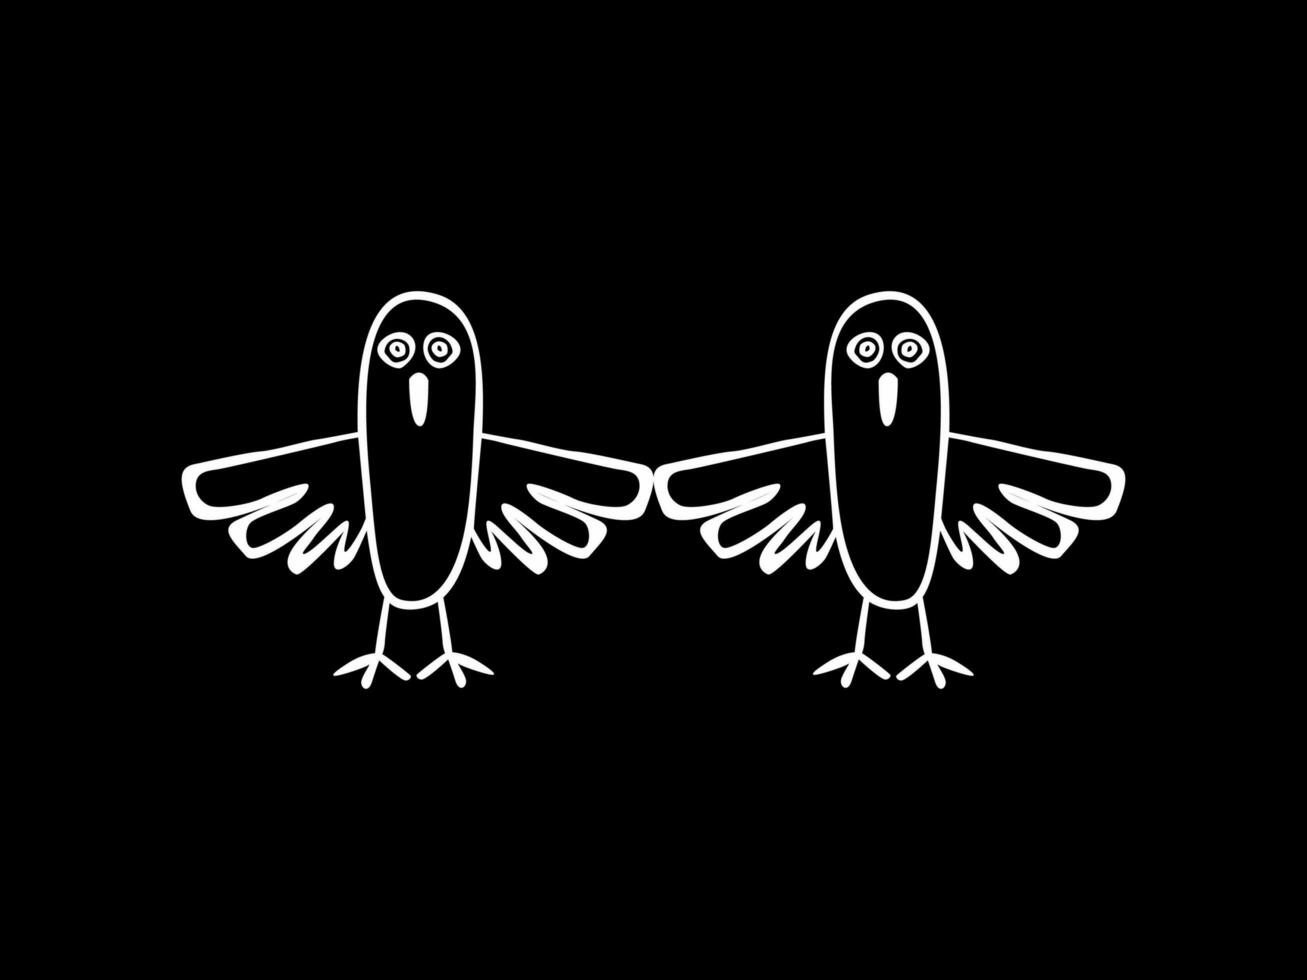 Line Art of the Pair Cute Bird, Naive Illustration, for Art Illustration, Apps, Website, Logo Type or Graphic Design Element. Vector Illustration